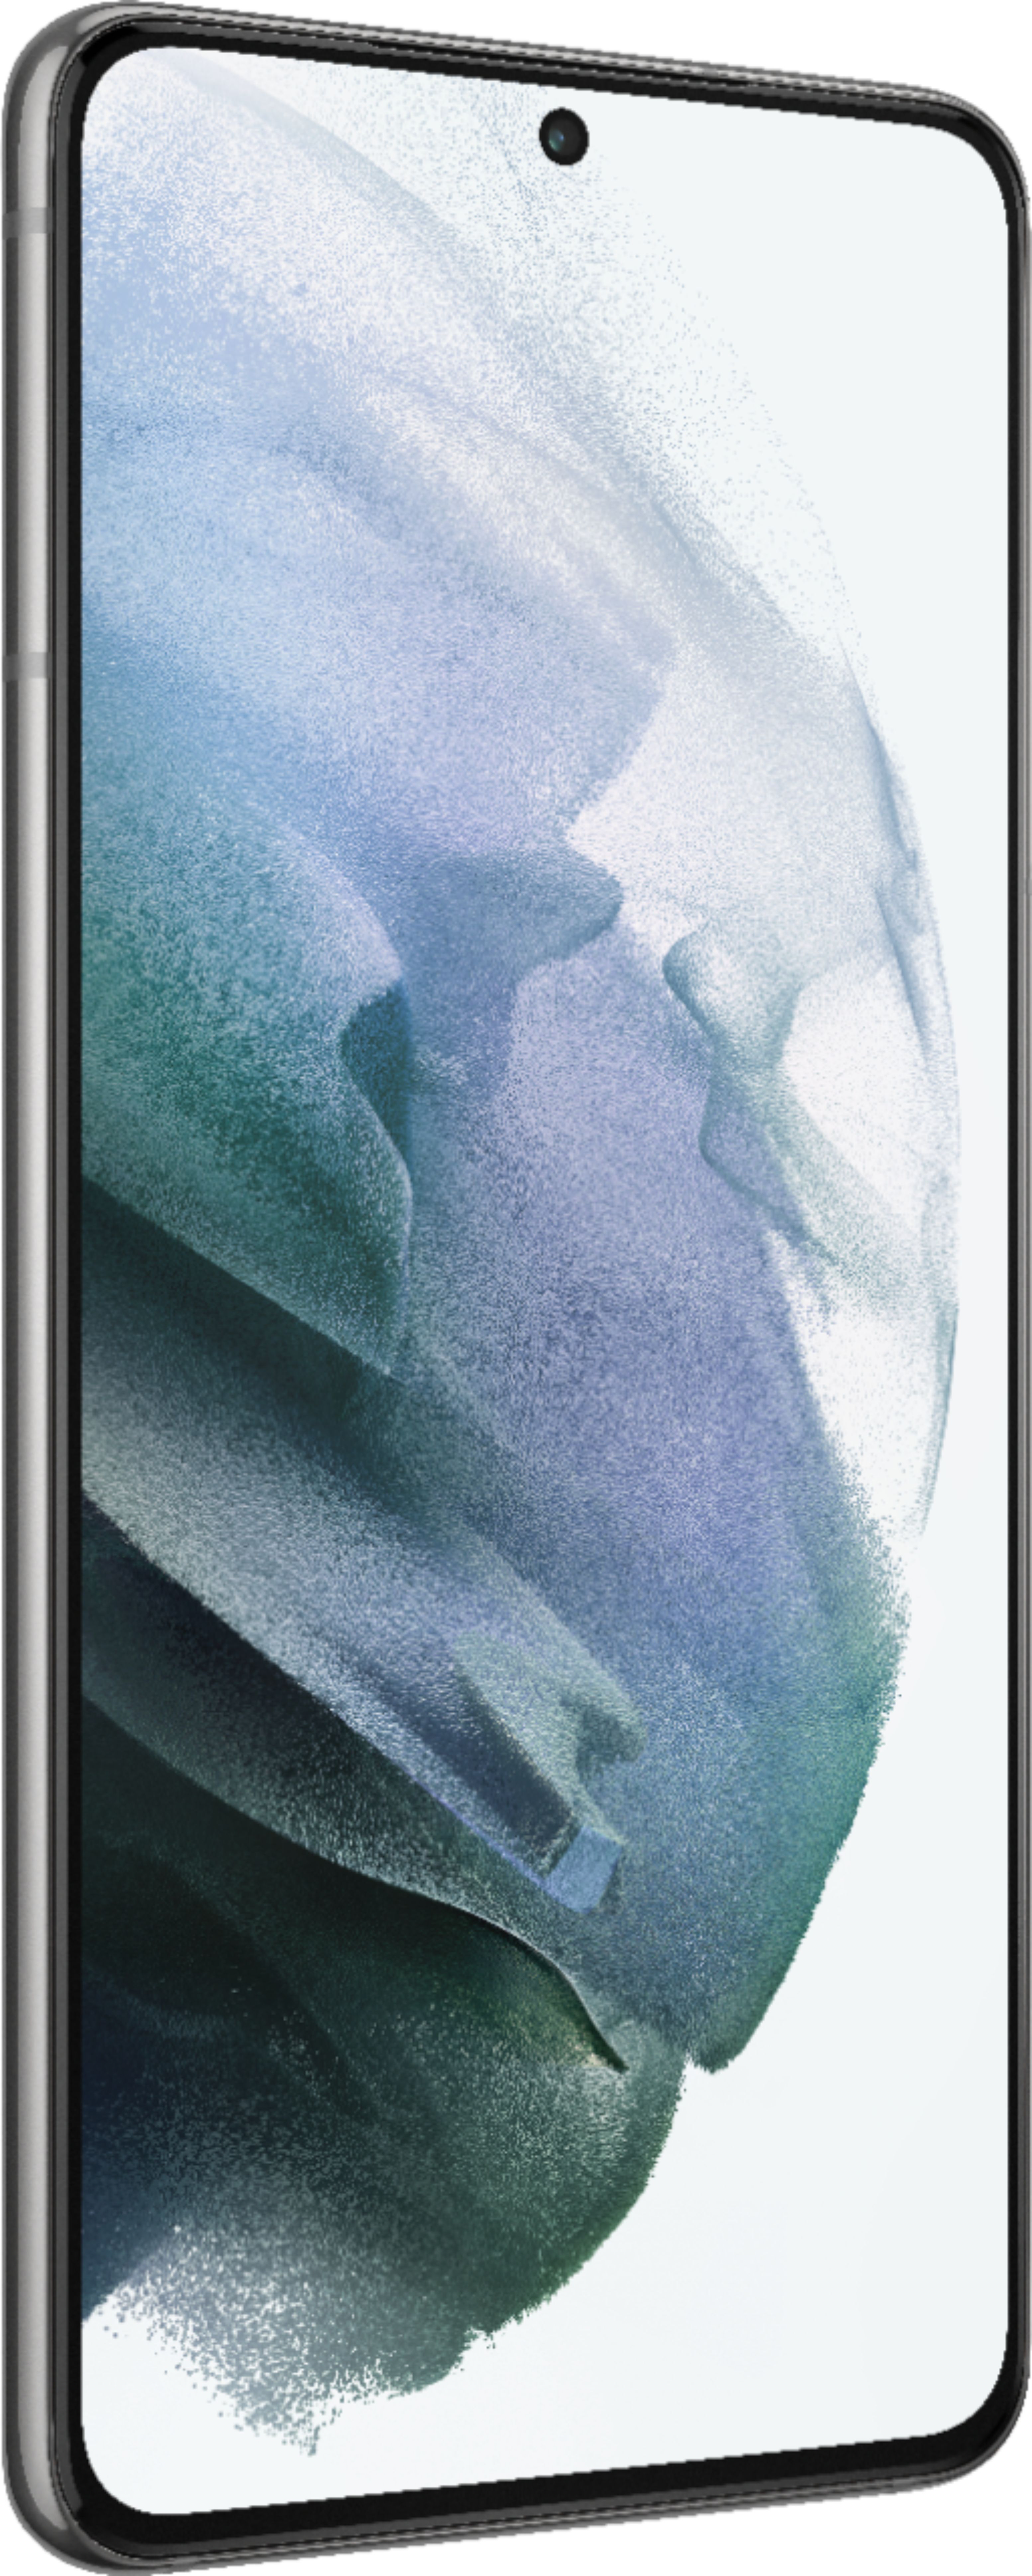 Samsung - Galaxy S21 5G 128GB - Phantom Gray (AT&T)